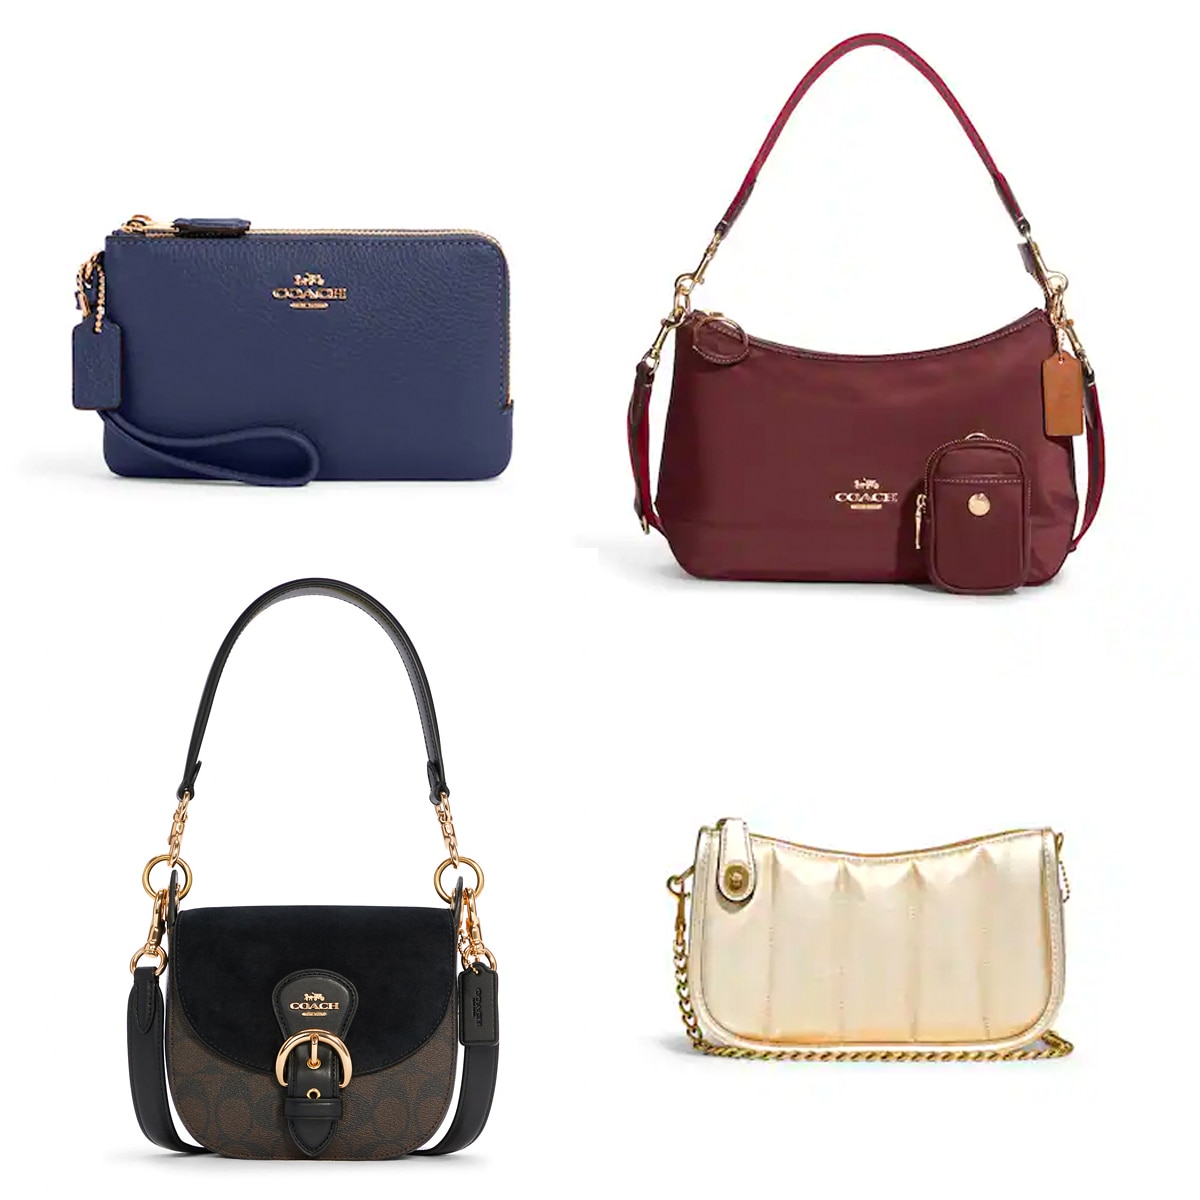 Coach Outlet % Off Sale: A $ Handbag for $ & More Trendy Deals